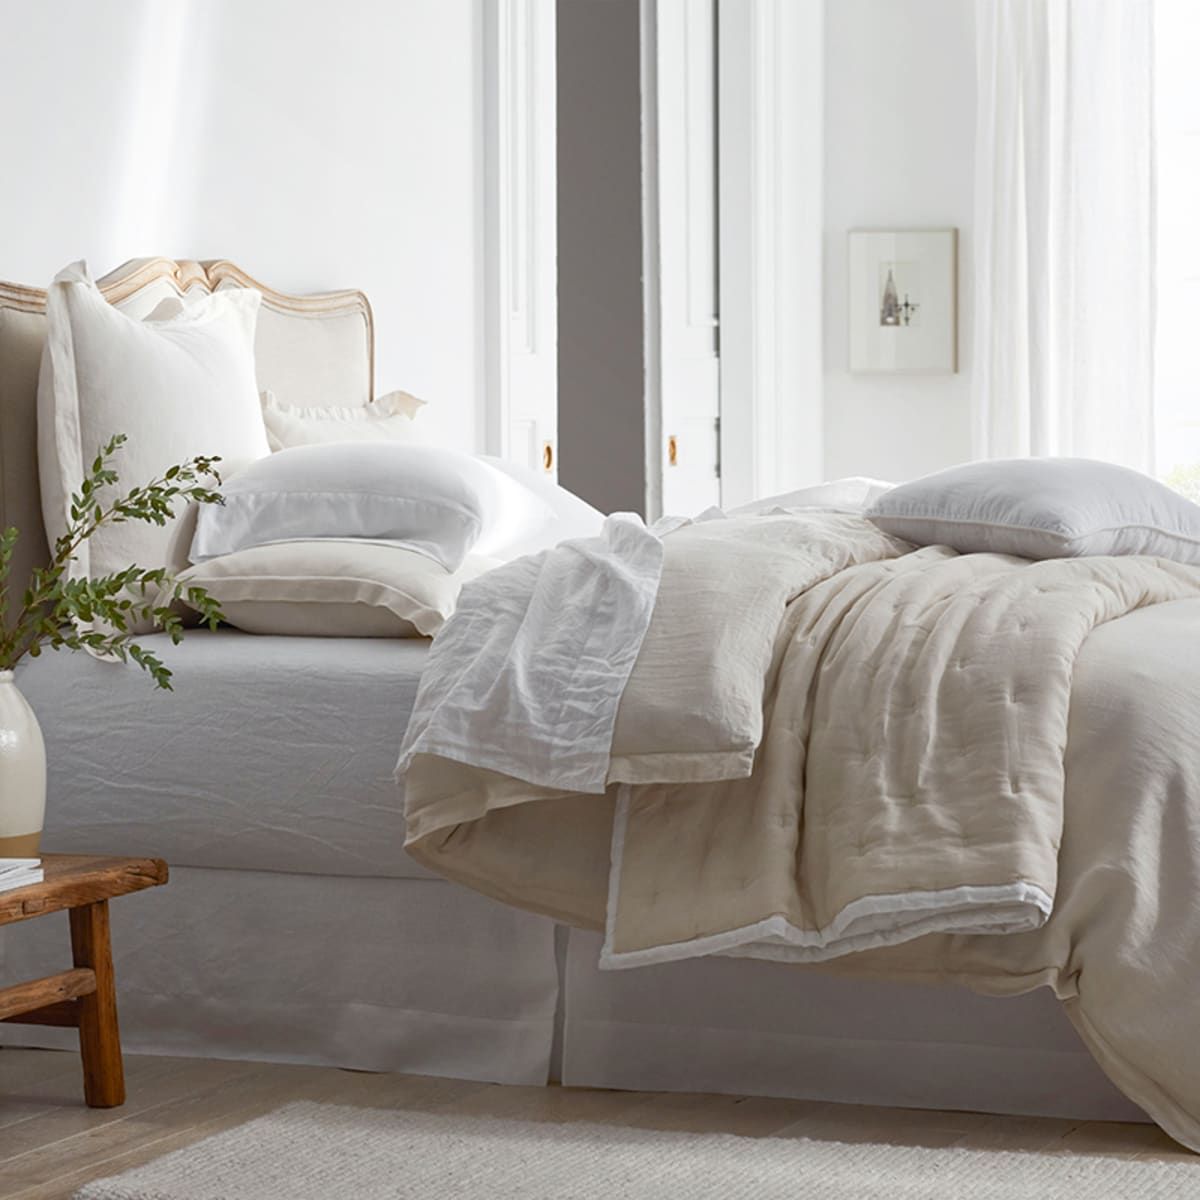 Best Bedding Sets to Shop Now – Parachute, Brooklinen